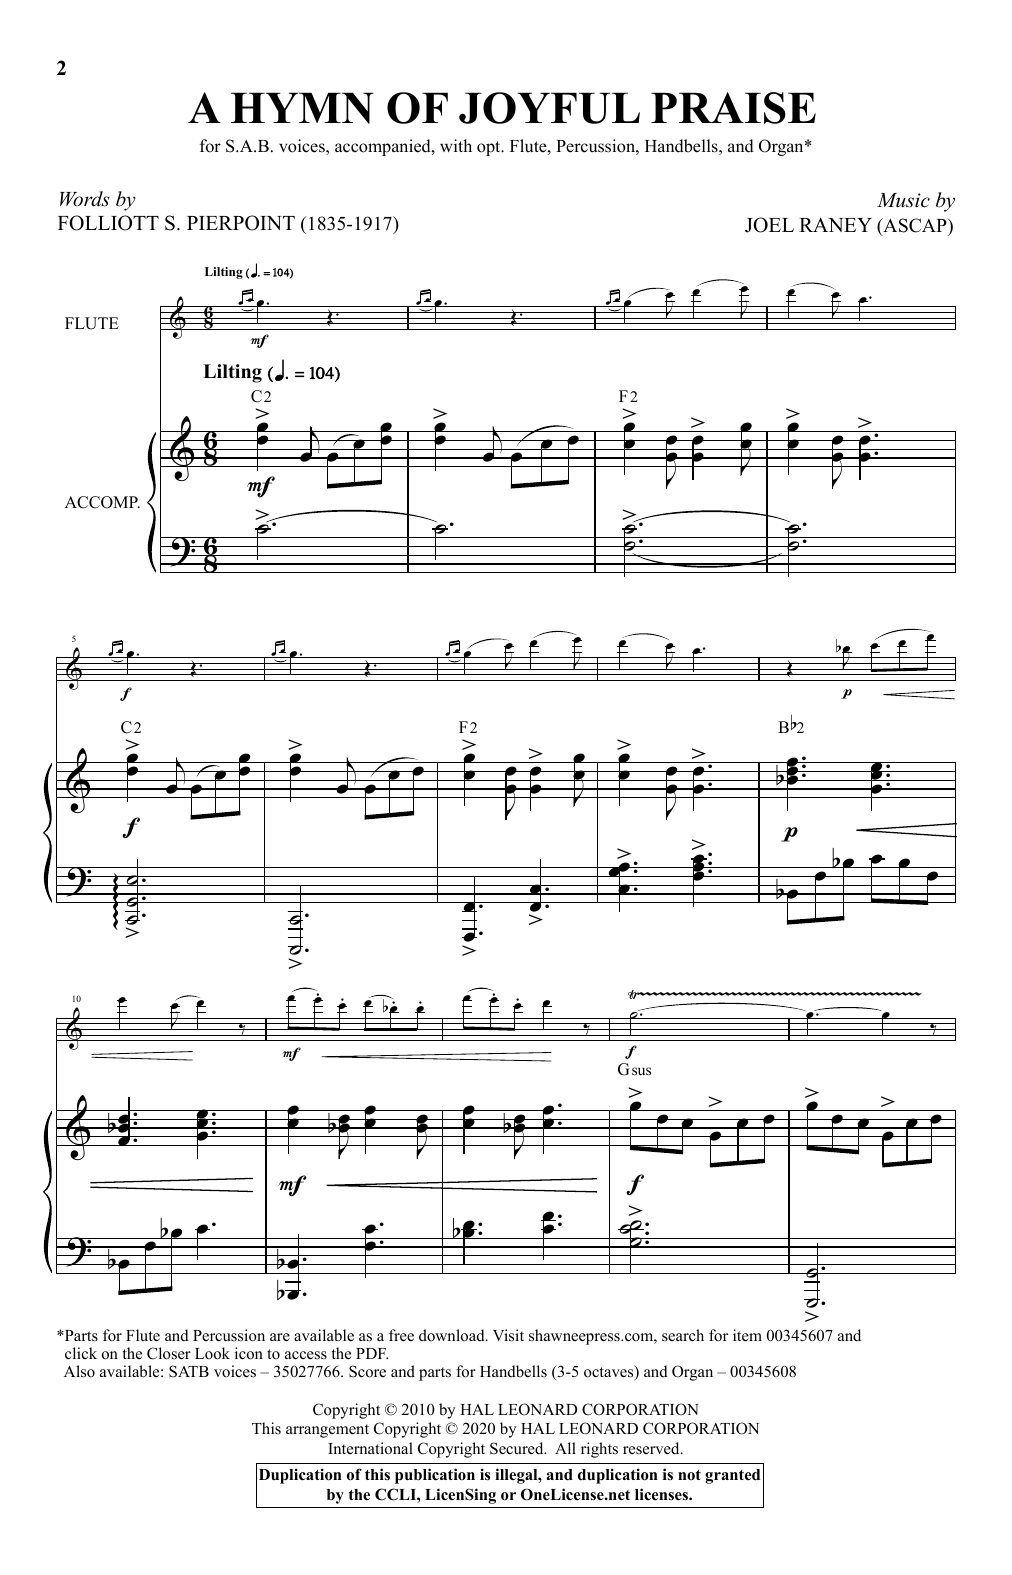 Download Folliott Pierpoint and Joel Raney A Hymn Of Joyful Praise Sheet Music and learn how to play SAB Choir PDF digital score in minutes